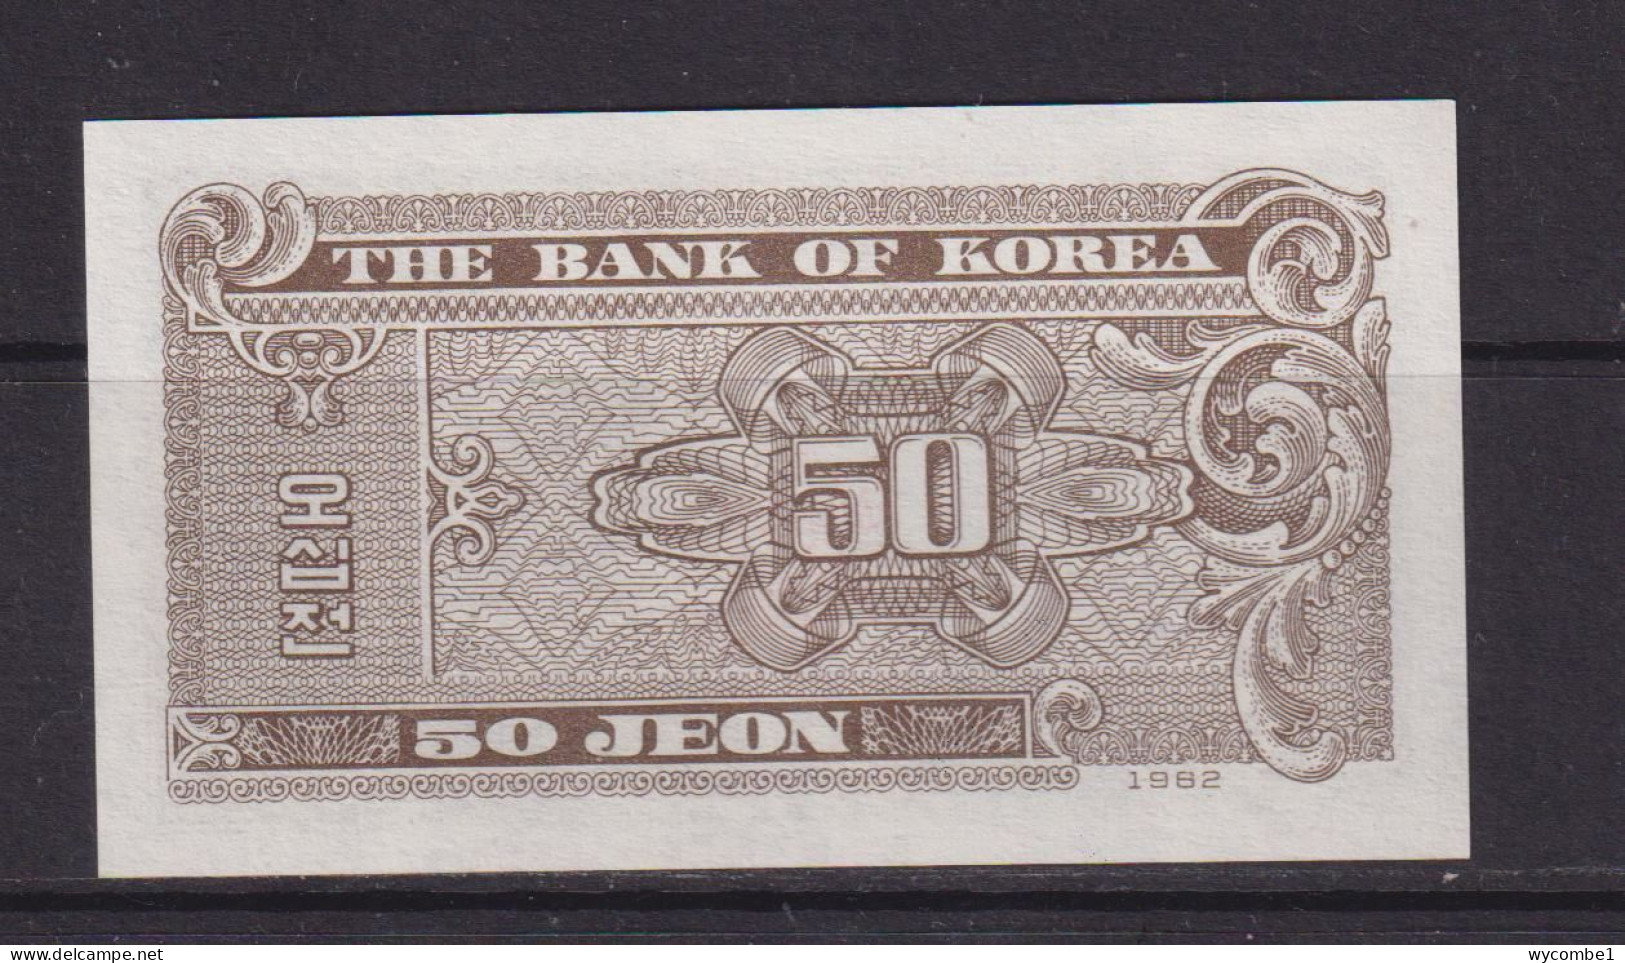 SOUTH KOREA - 1962 50 Jeon UNC/aUNC Banknote - Corea Del Sur